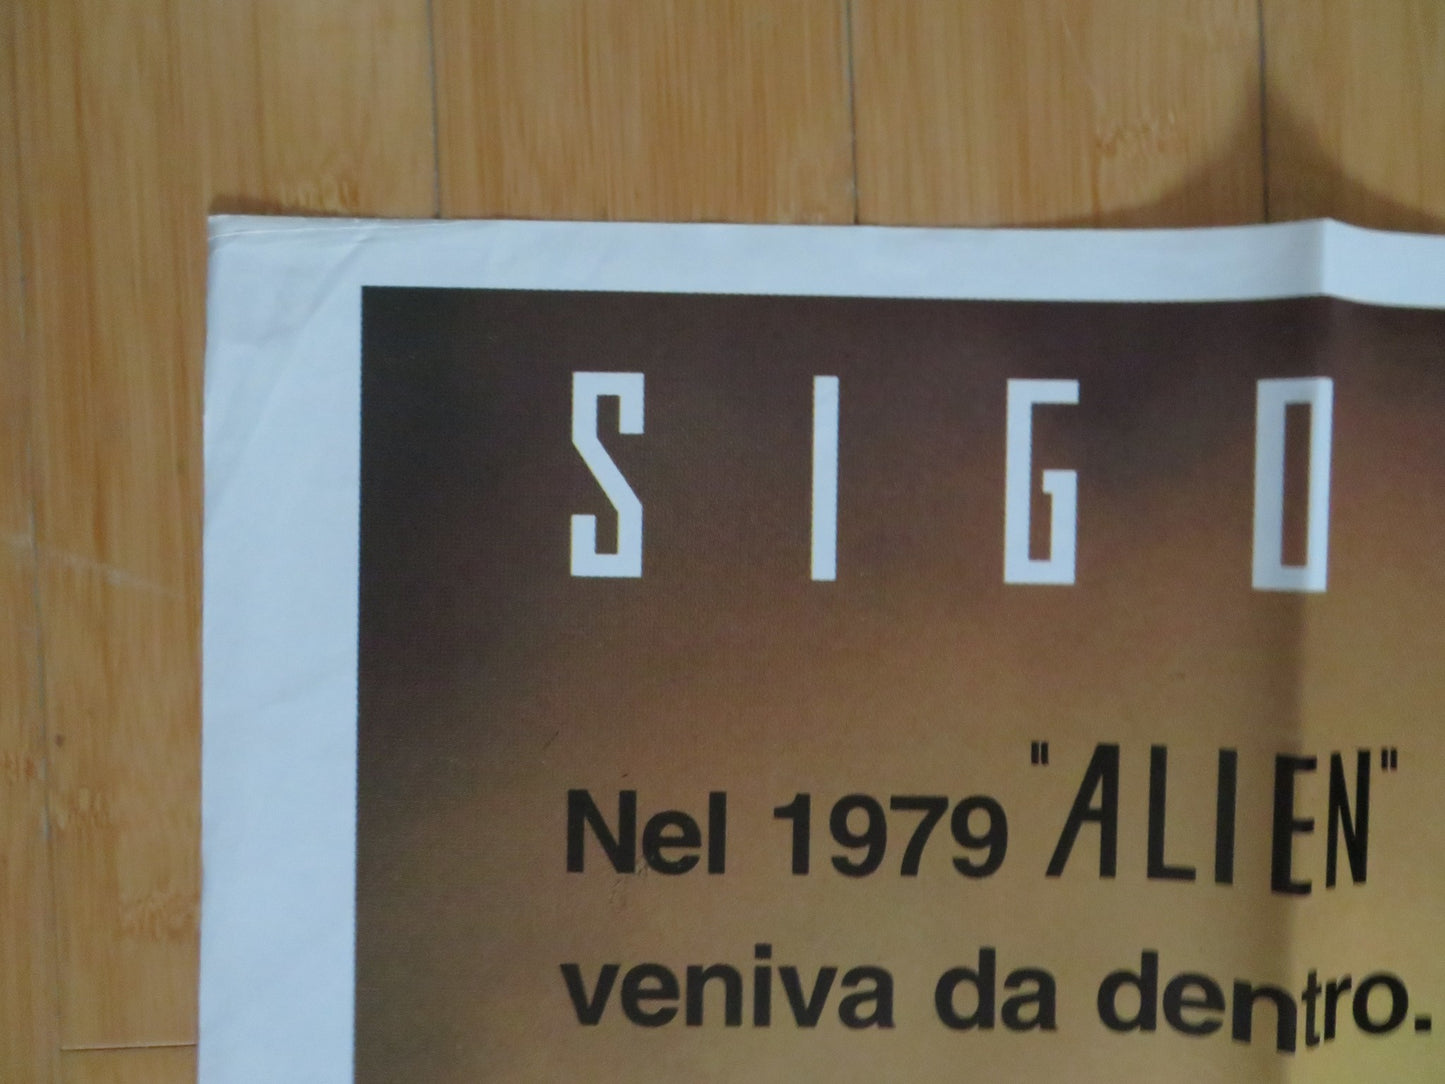 ALIEN 3 ITALIAN 2 FOGLIO POSTER SIGOURNEY WEAVER CHARLES DANCE 1992